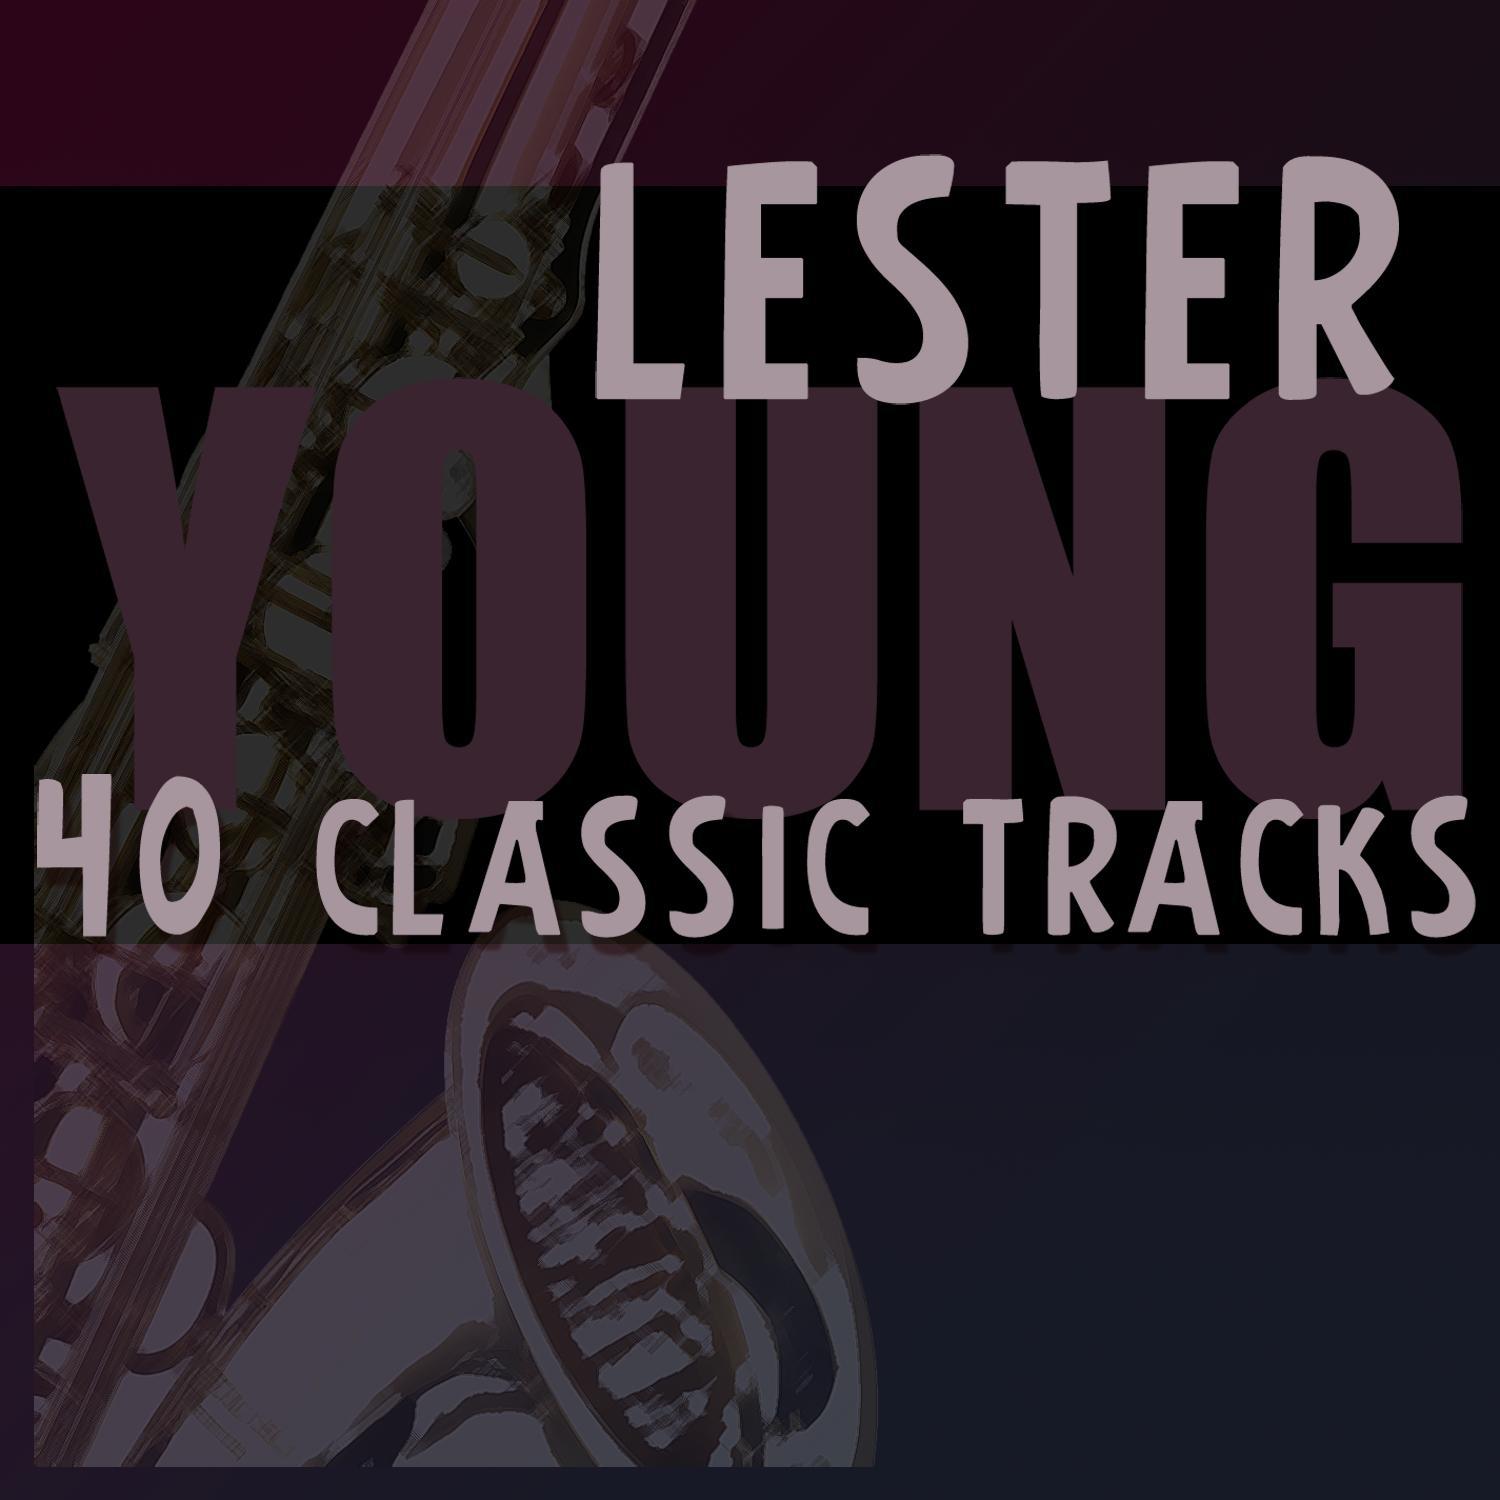 40 Classic Tracks